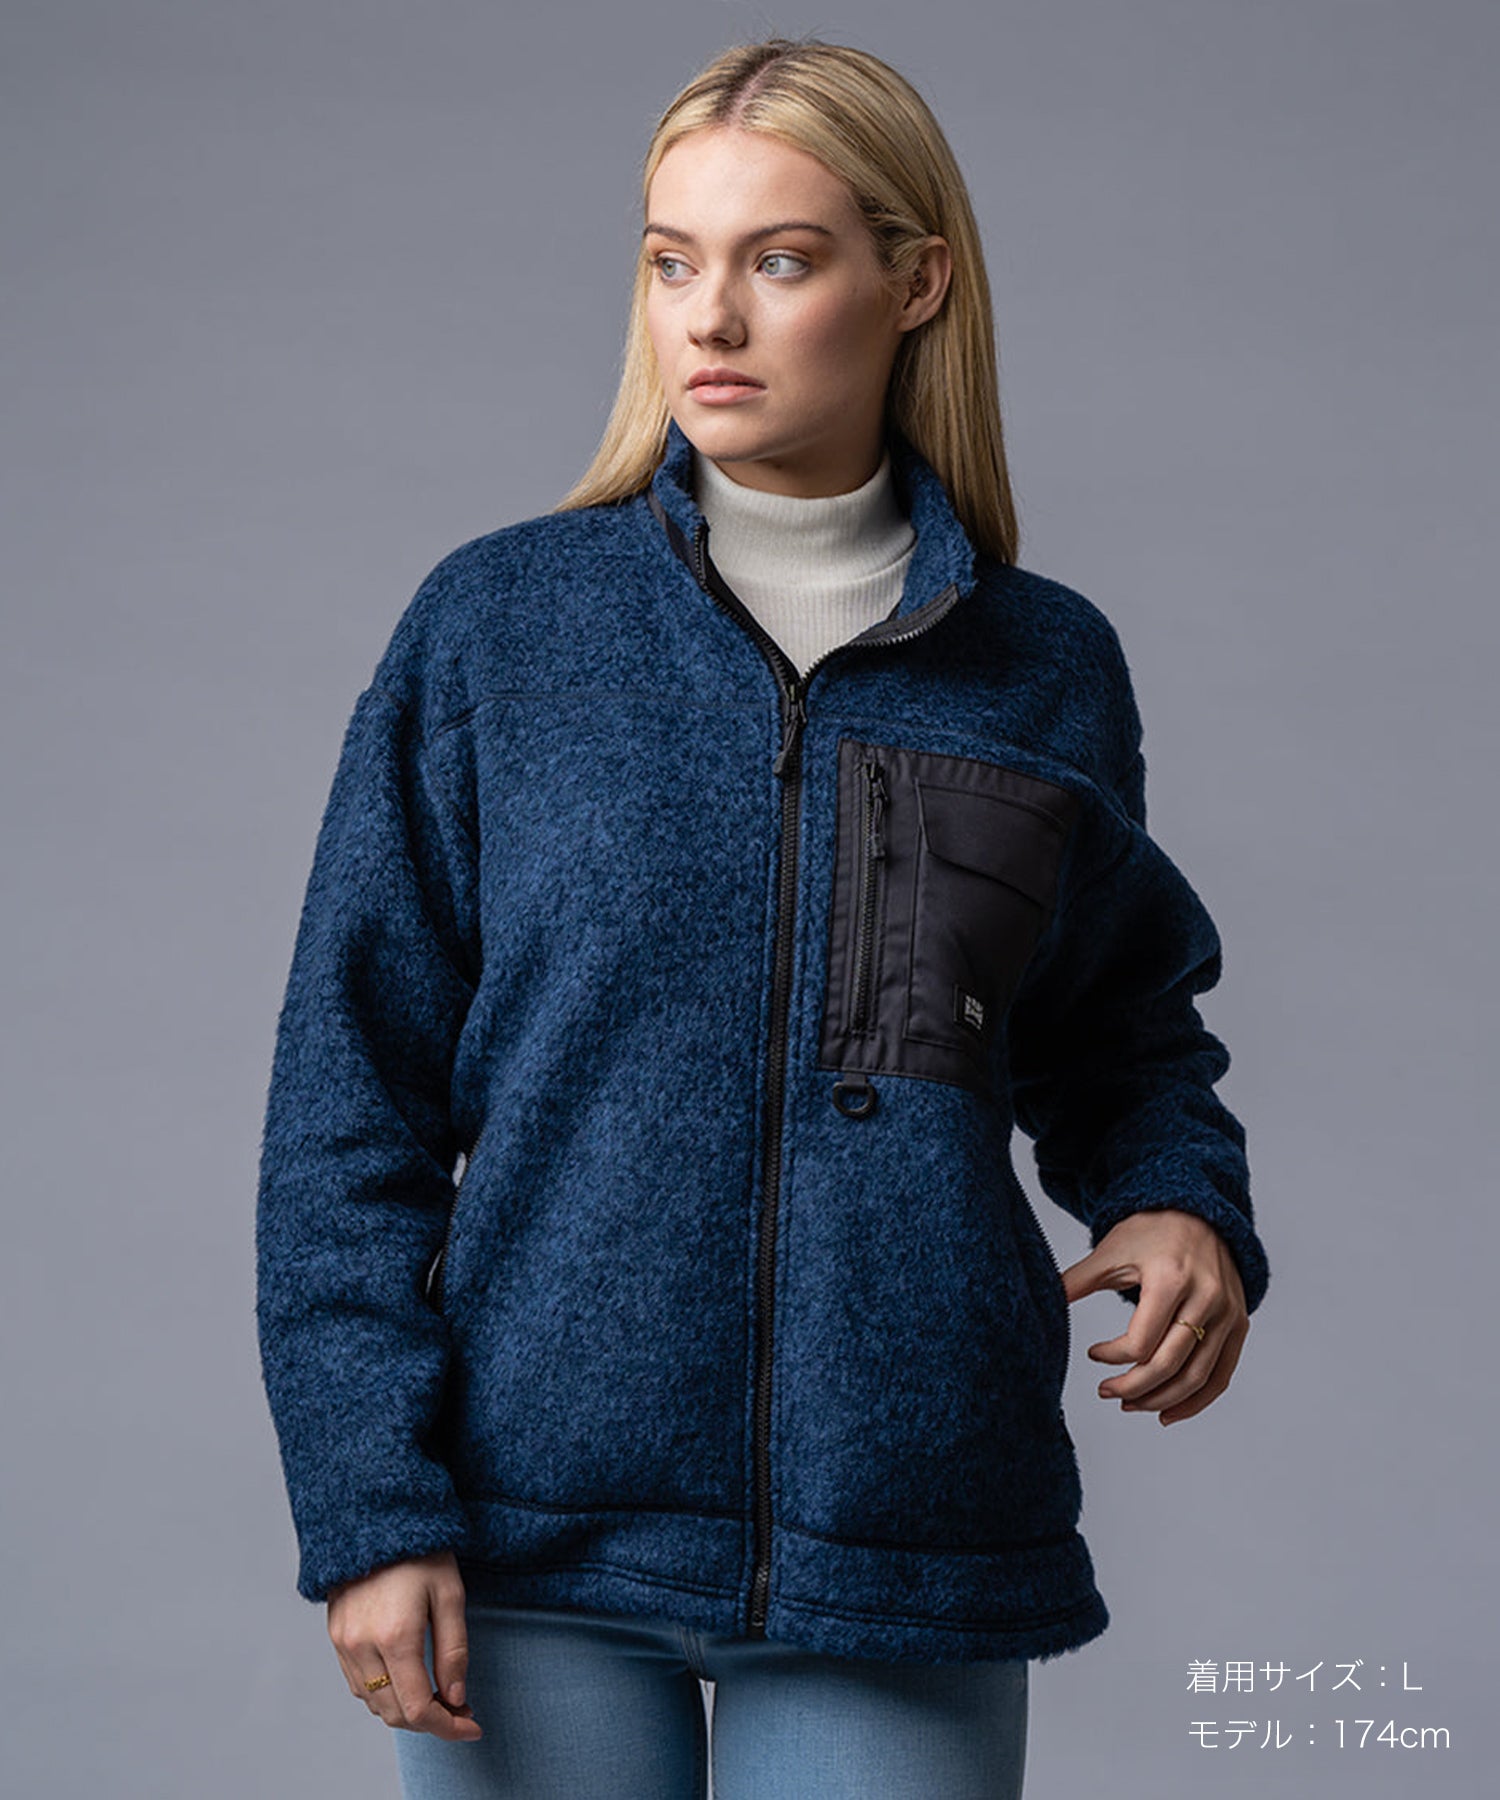 Lightweight wool fleece jacket